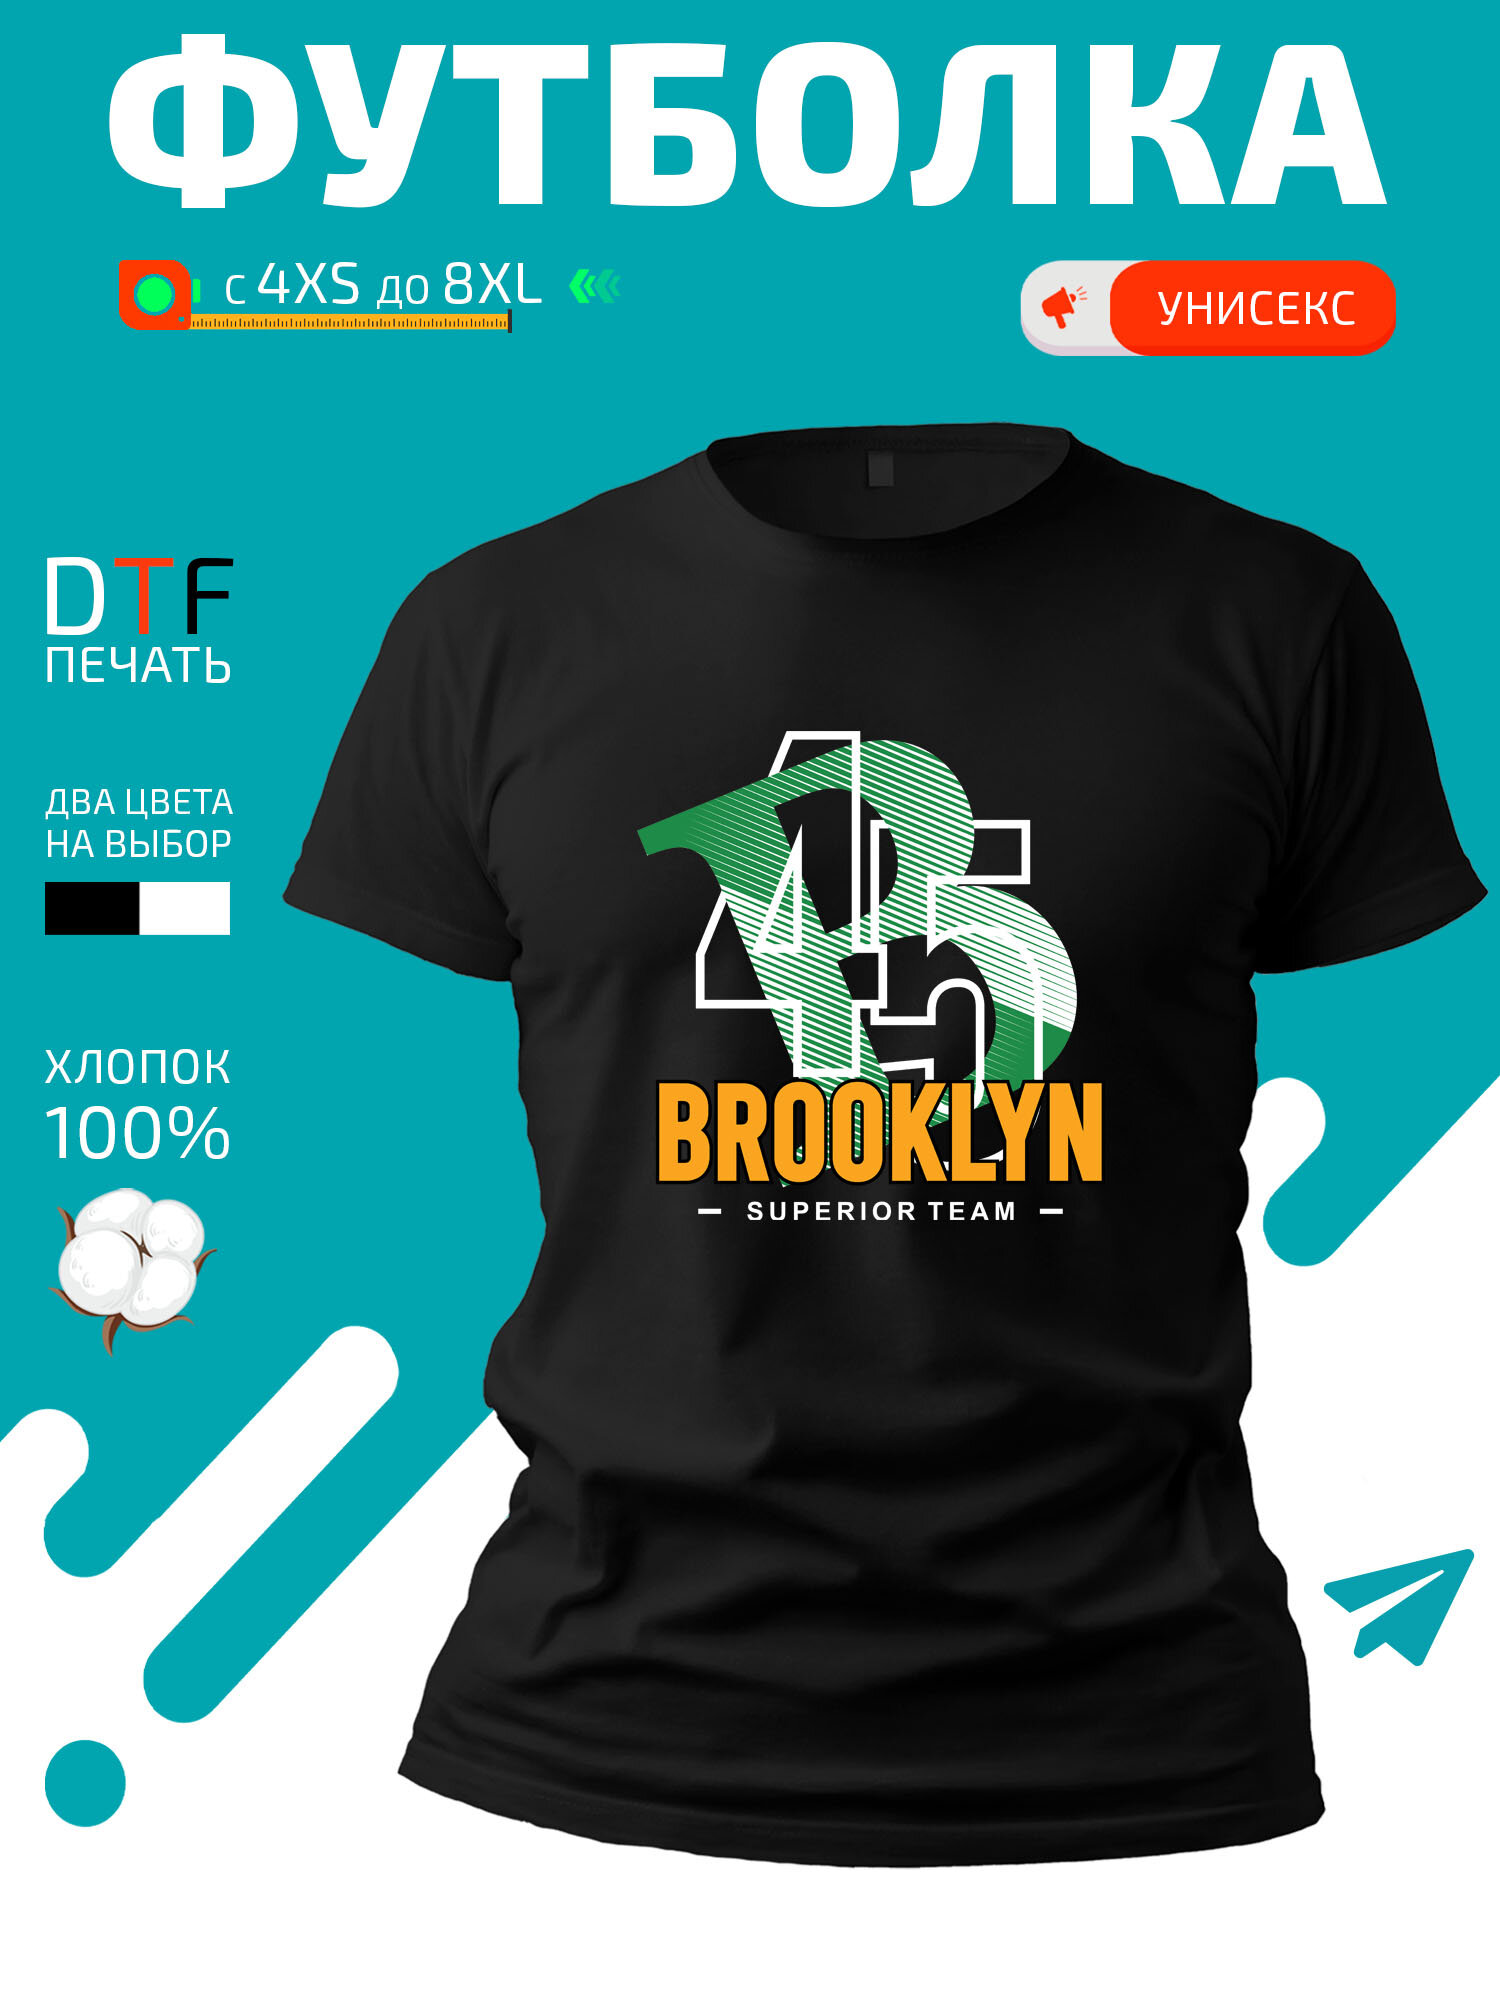 Футболка Brooklyn superior B 45 team-Бруклин превосходная команда